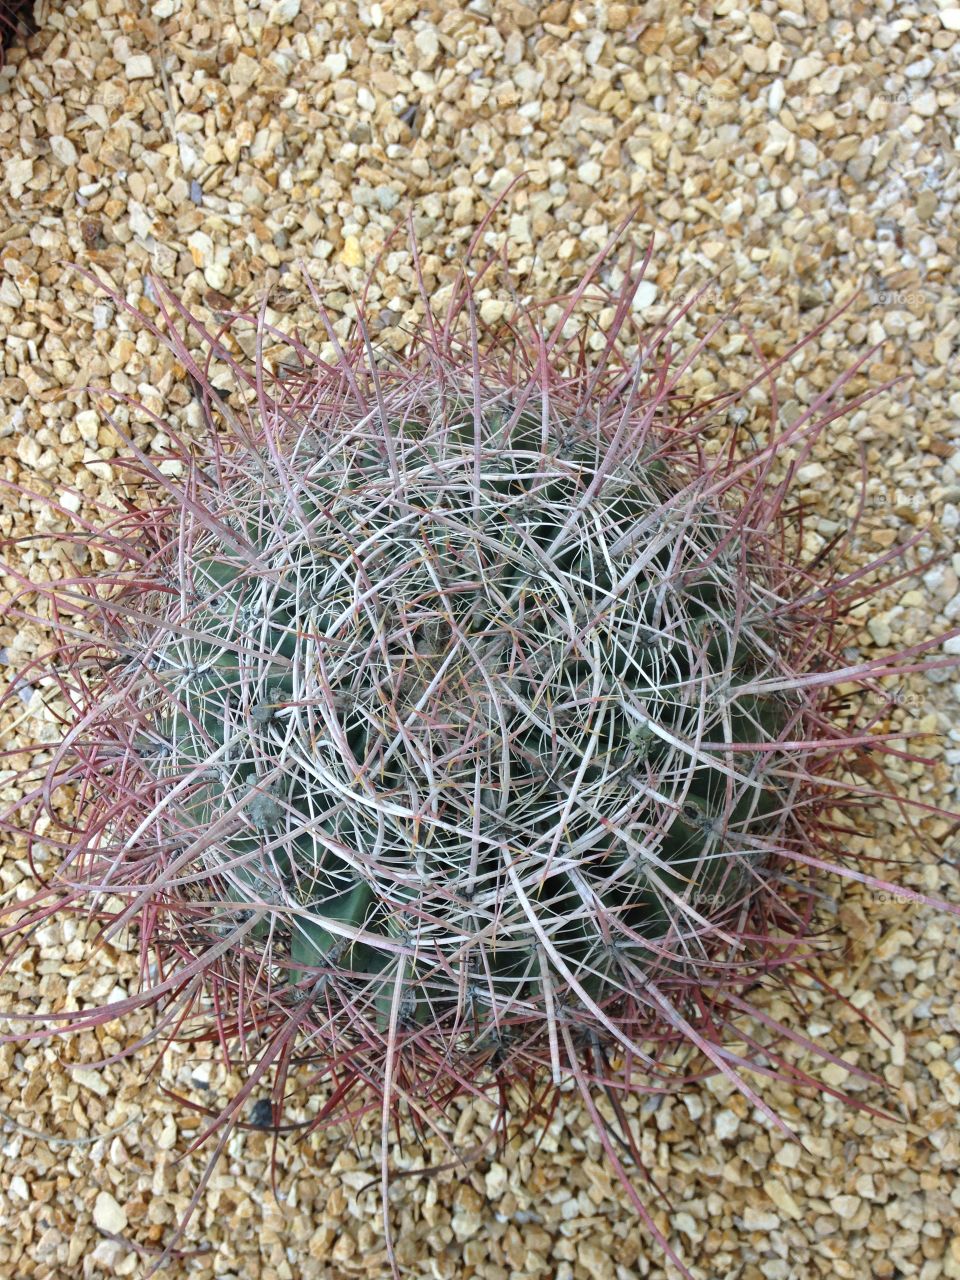 Prickly cacti 